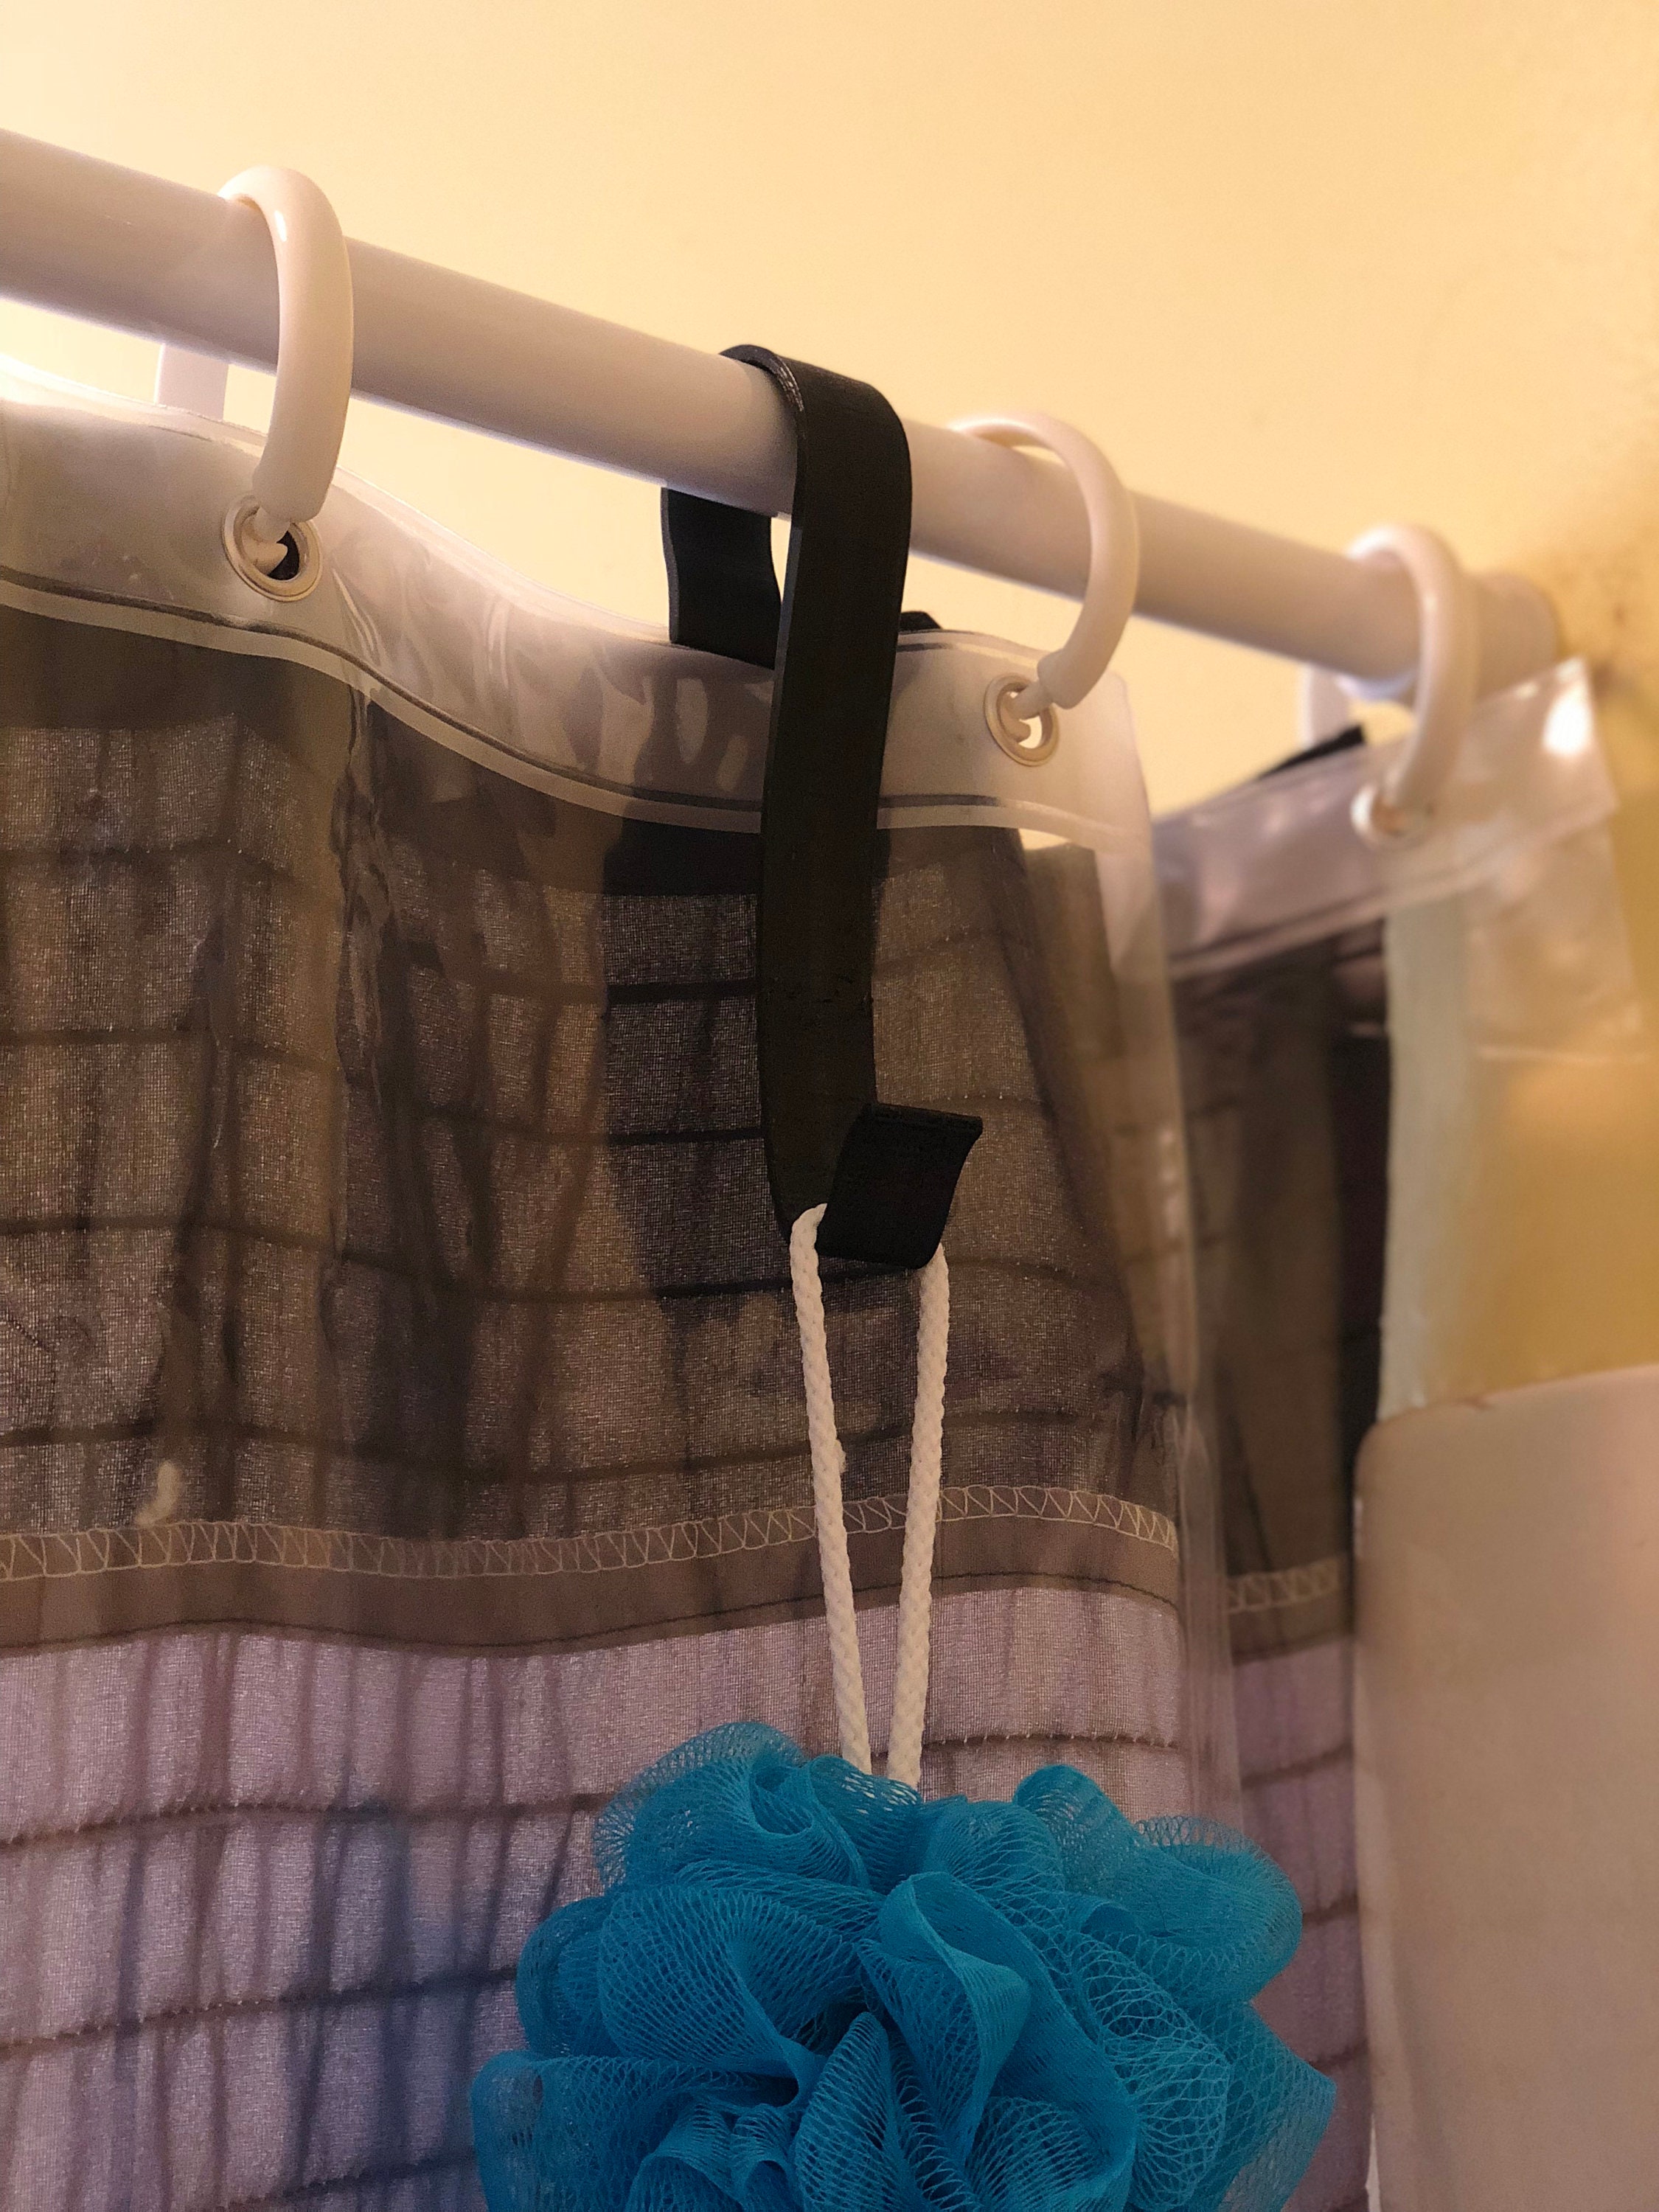 Yapicoco Shower hooks for inside shower loofah,4 Pack Bathroom